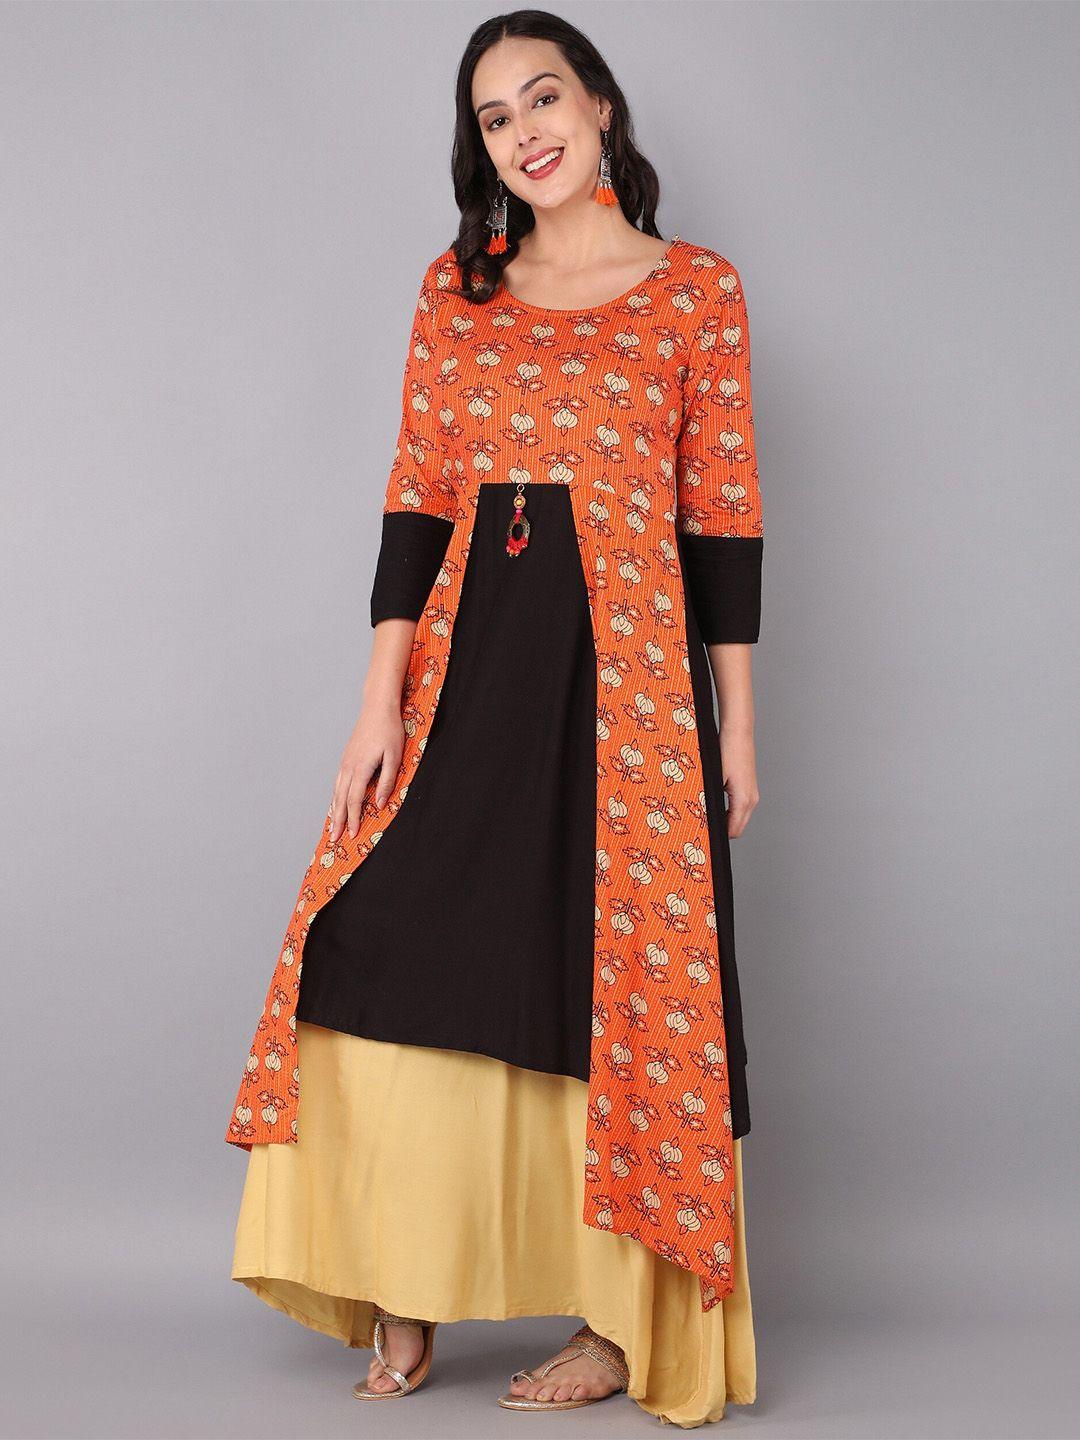 parika creation orange ethnic motifs cotton ???????ethnic maxi dress